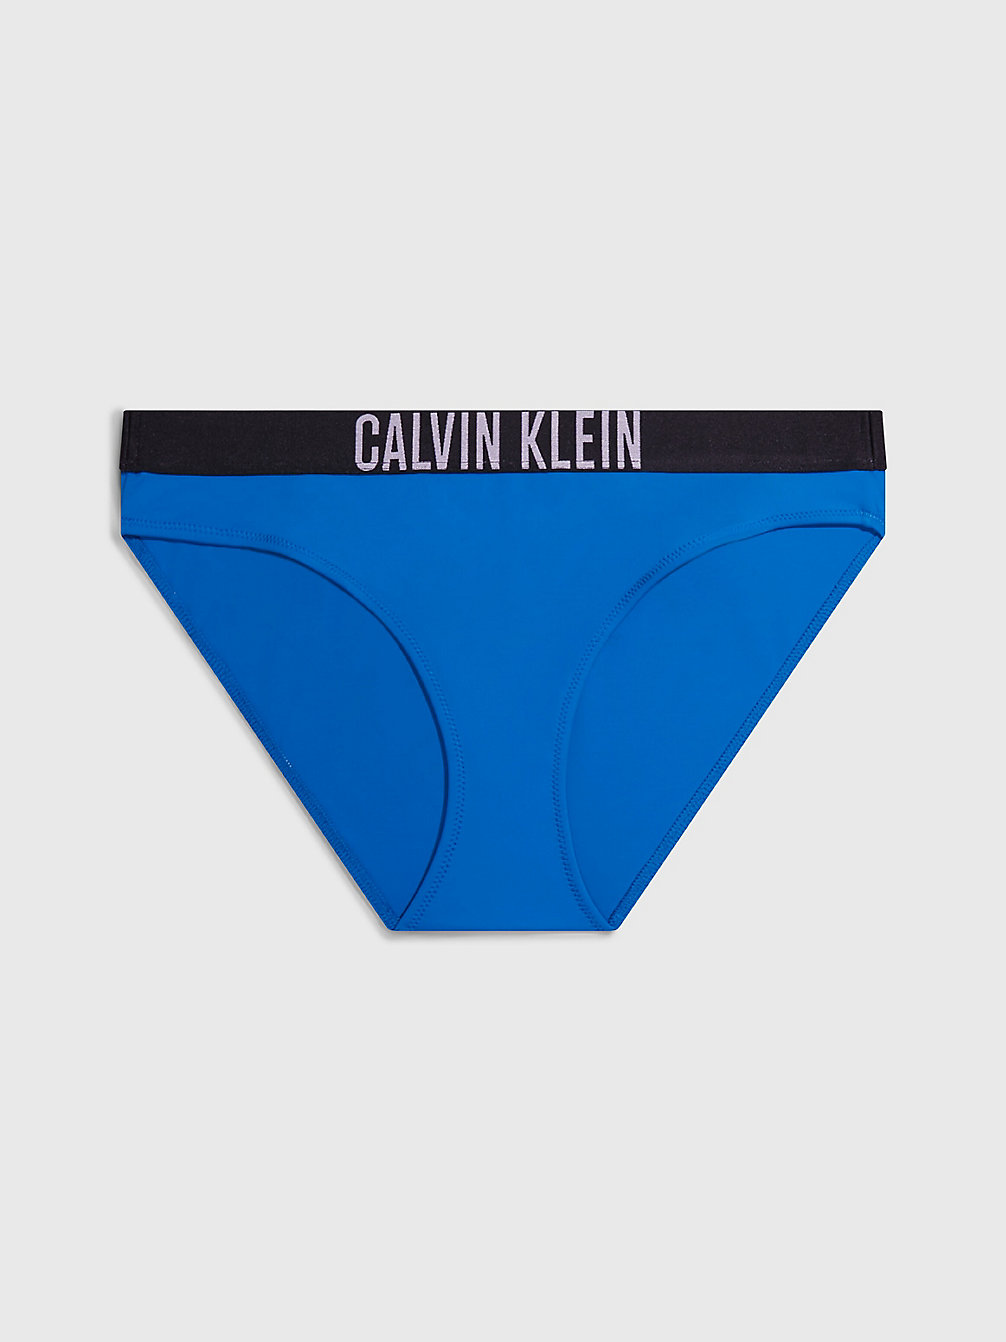 Bas De Bikini - Intense Power > DYNAMIC BLUE > undefined femmes > Calvin Klein